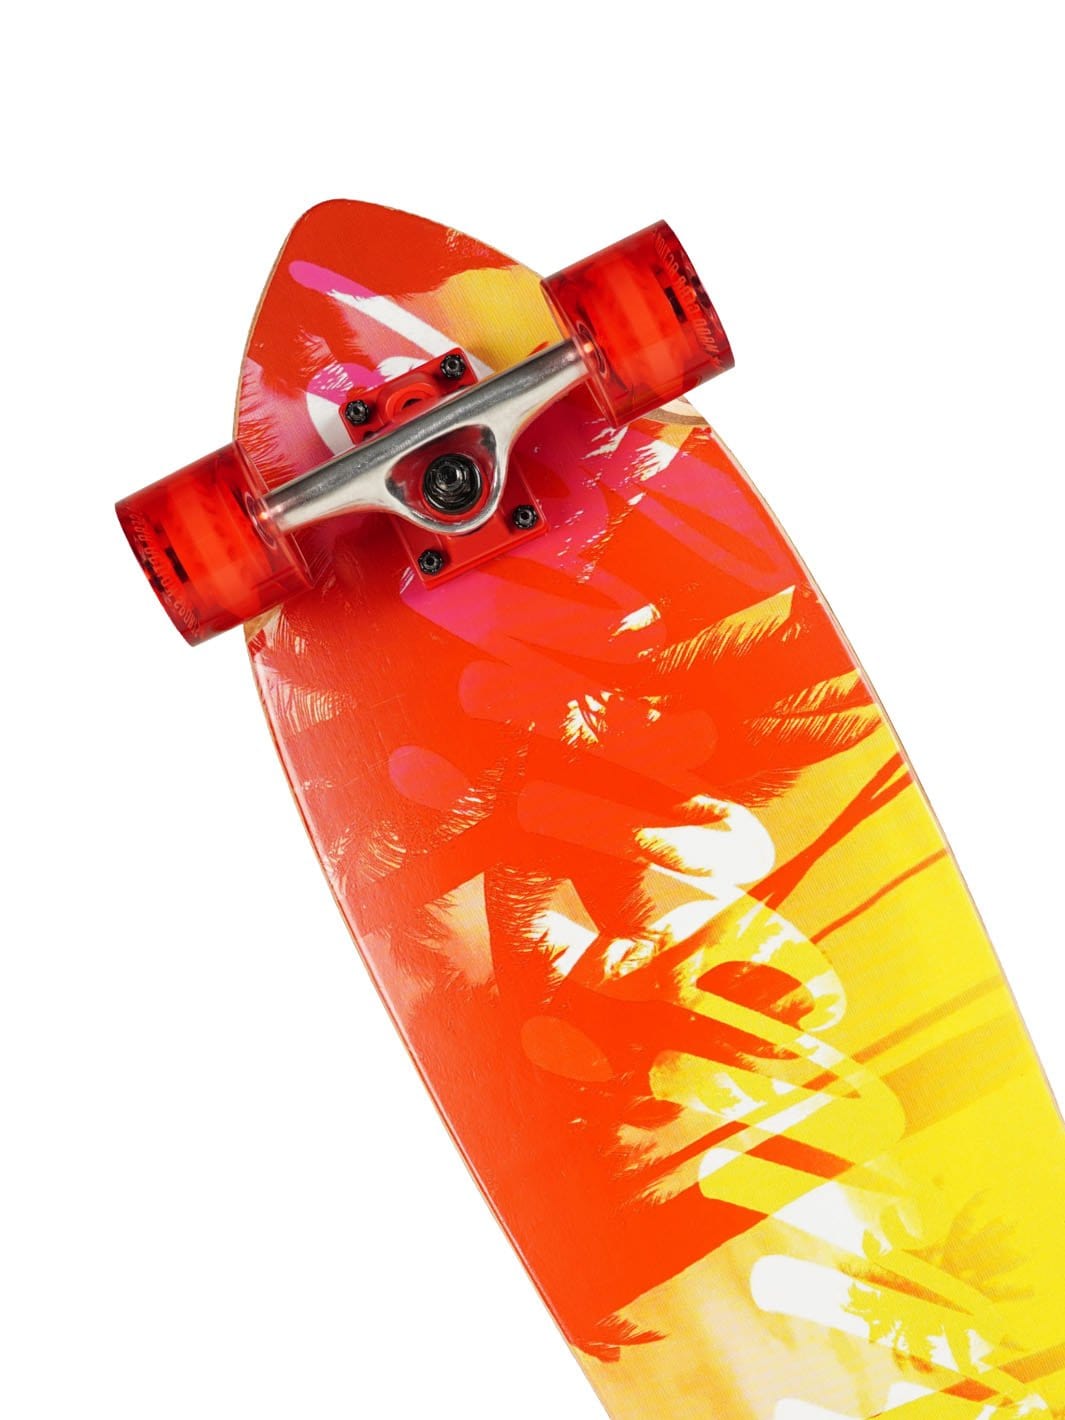 Madd Gear 32" Cruiser Board Skateboard Maple Adults High Quality Aluminum Trucks Surf Beach Yellow Orange Sunset